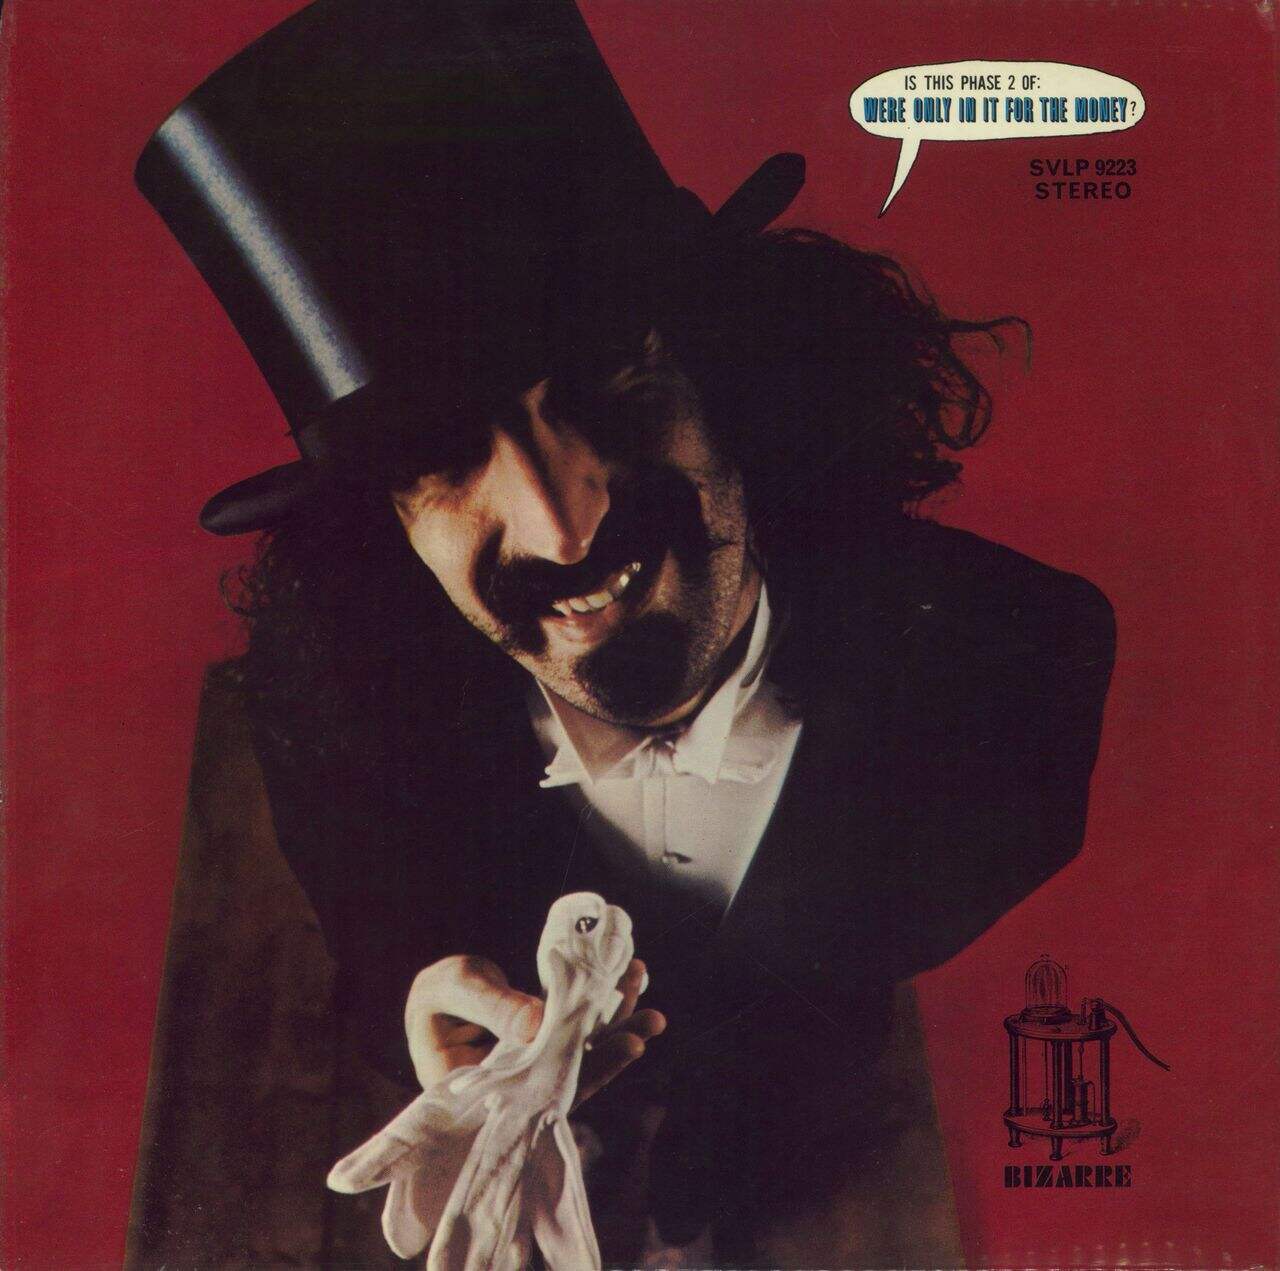 Frank Zappa Lumpy Gravy - 1st UK Vinyl LP